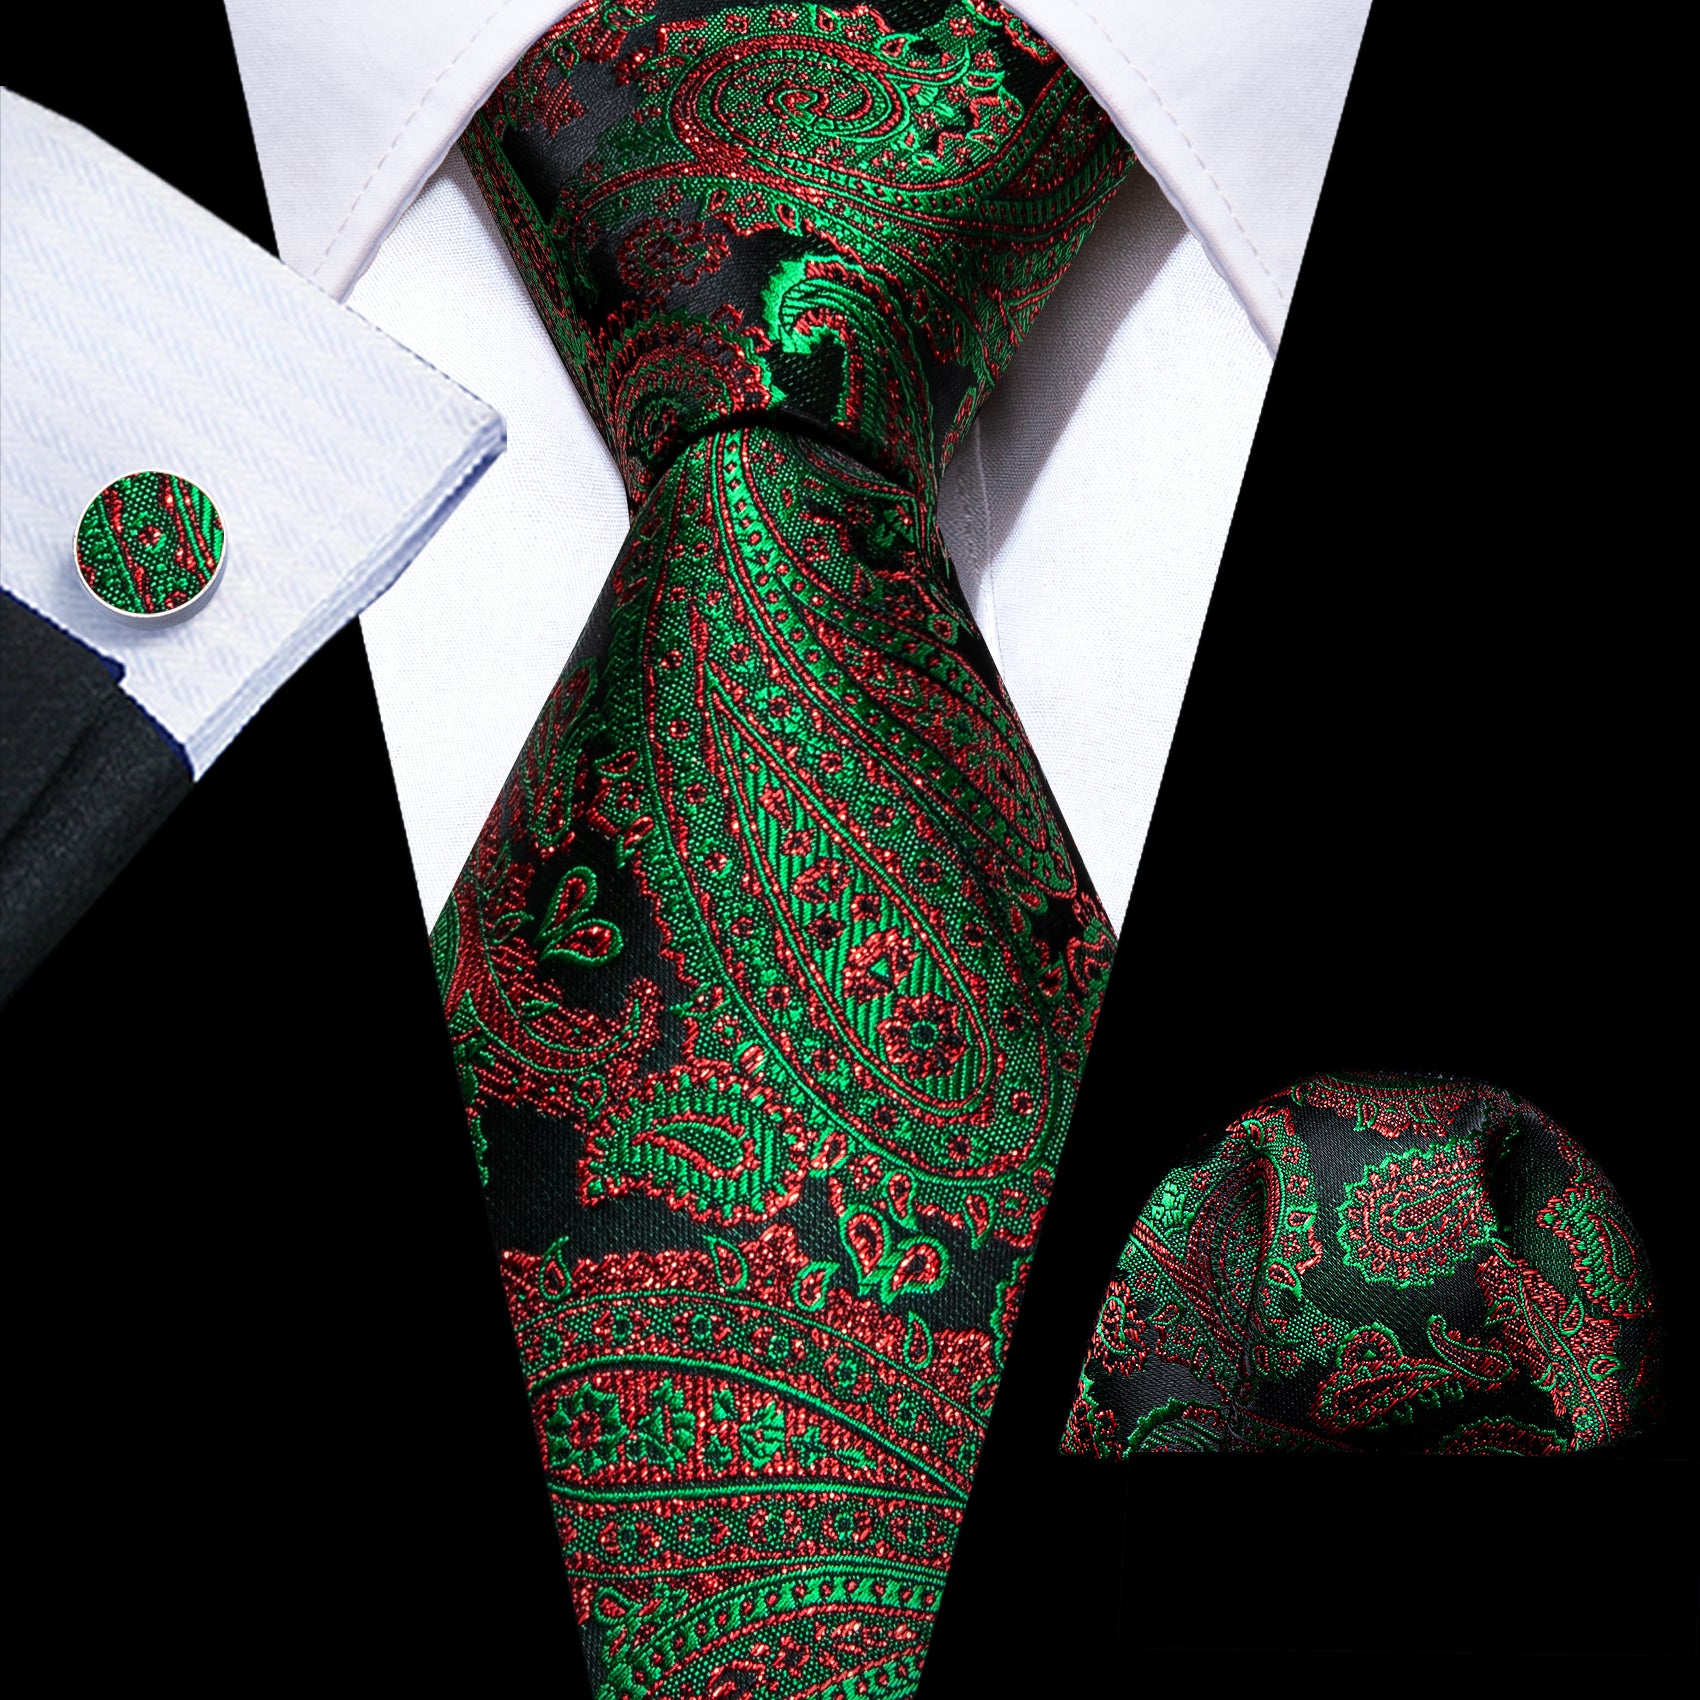 Luxury Green Red Brown Paisley Silk Tie Handkerchief Cufflinks Set